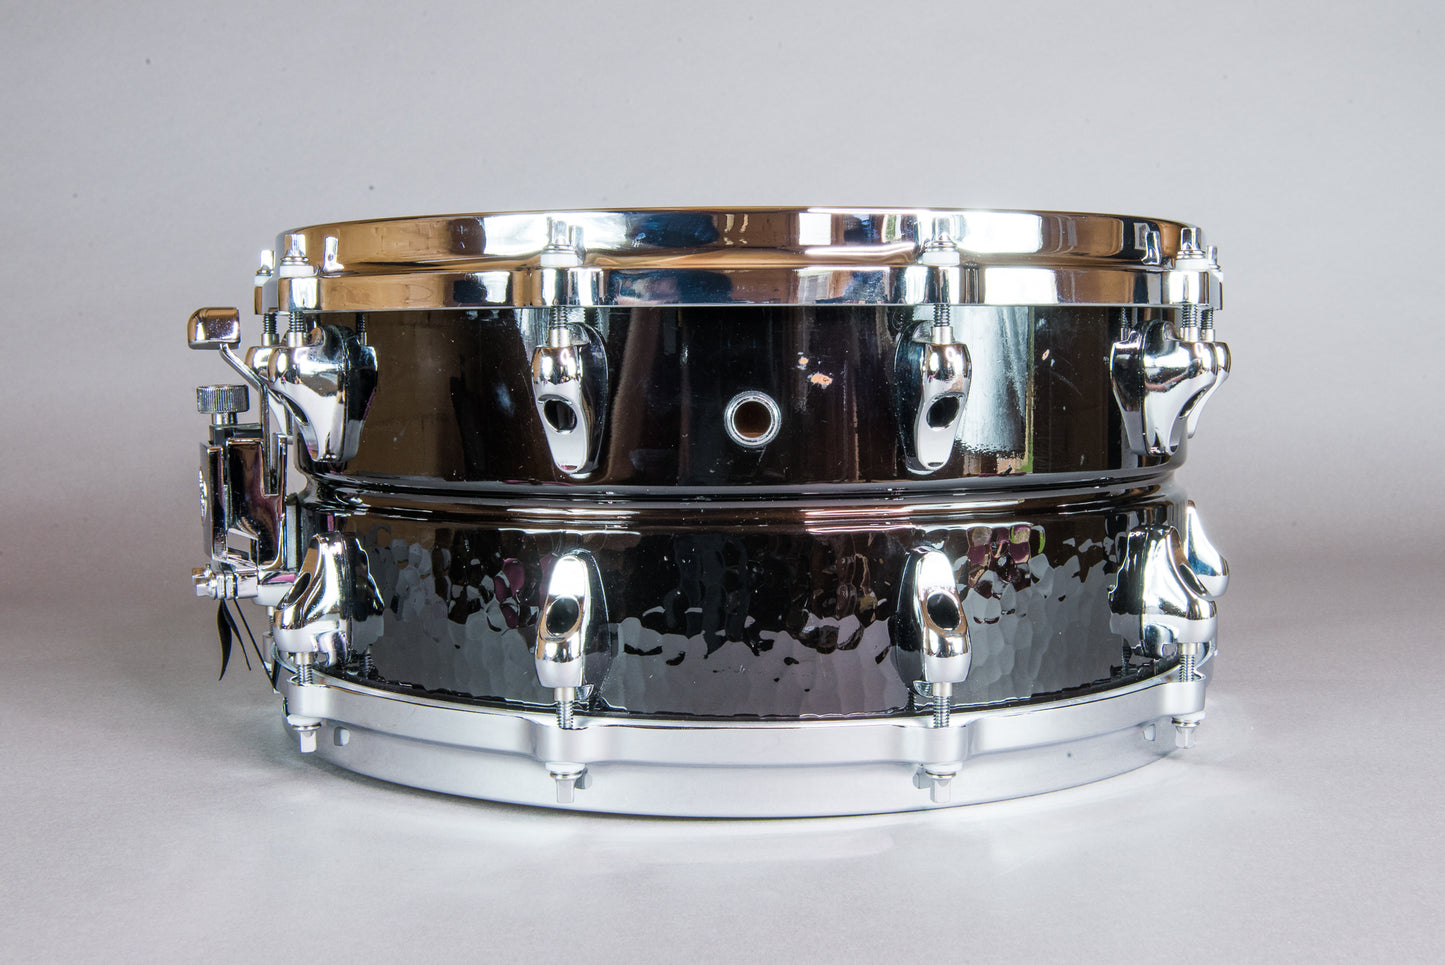 Yamaha 14” x 6.5” Mike Bordin Signature Snare Drum